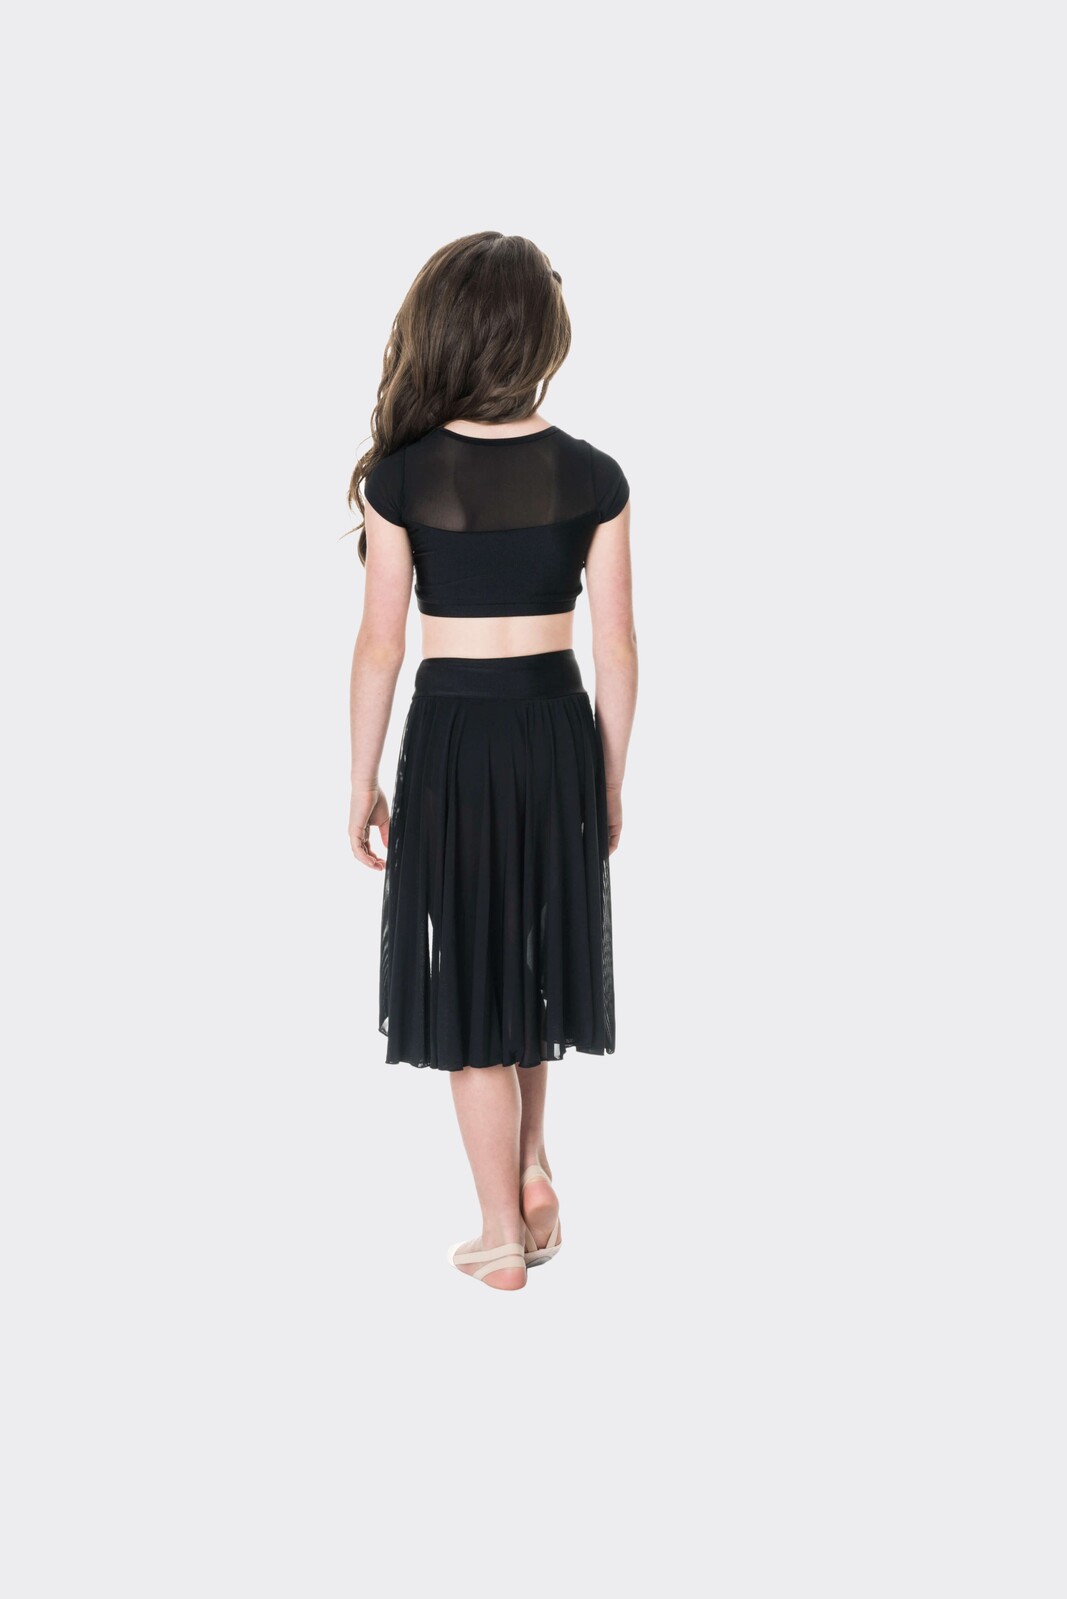 Studio 7 Inspire Mesh Skirt Adult X- Large; Black